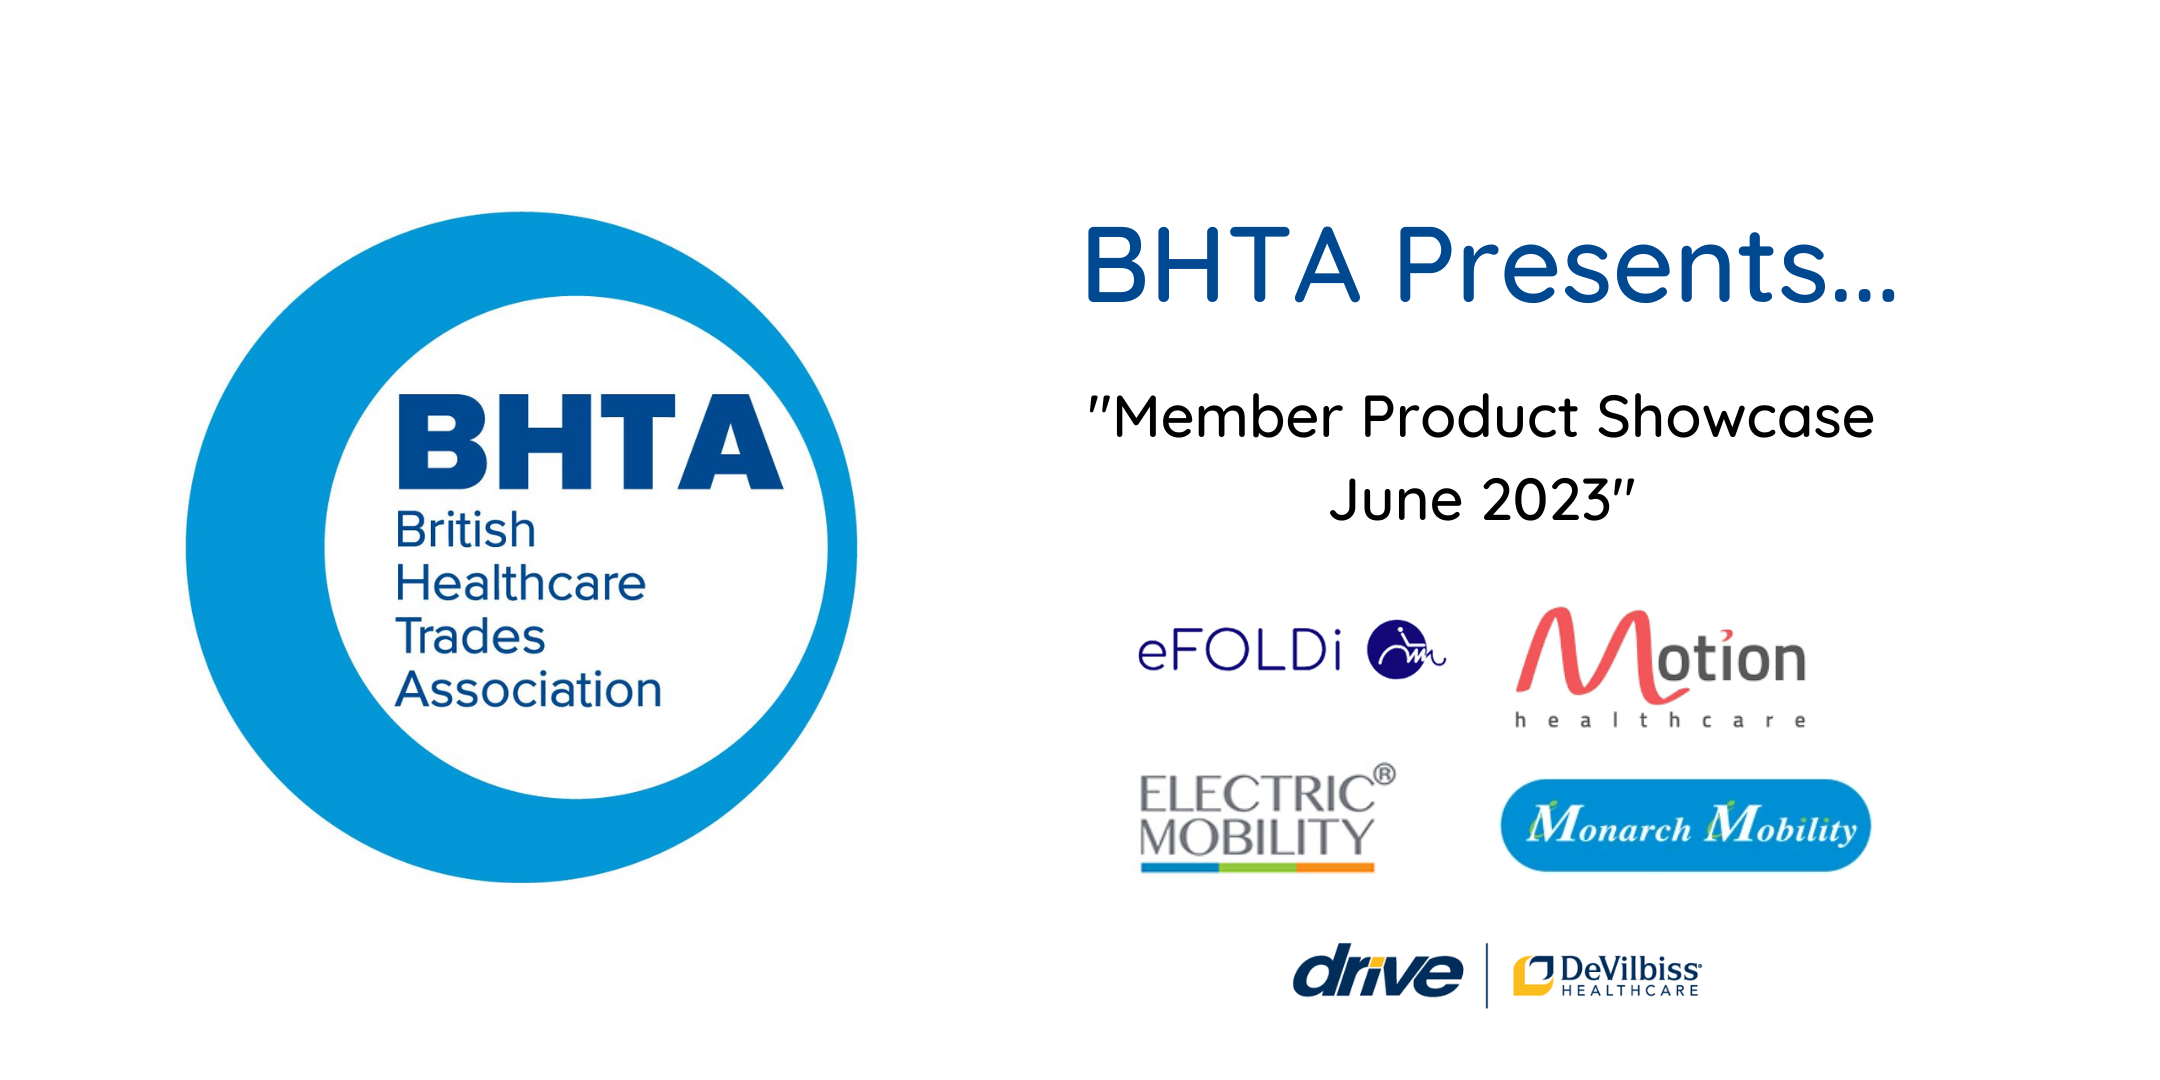 BHTA presents... "Member Product Showcase June 2023"